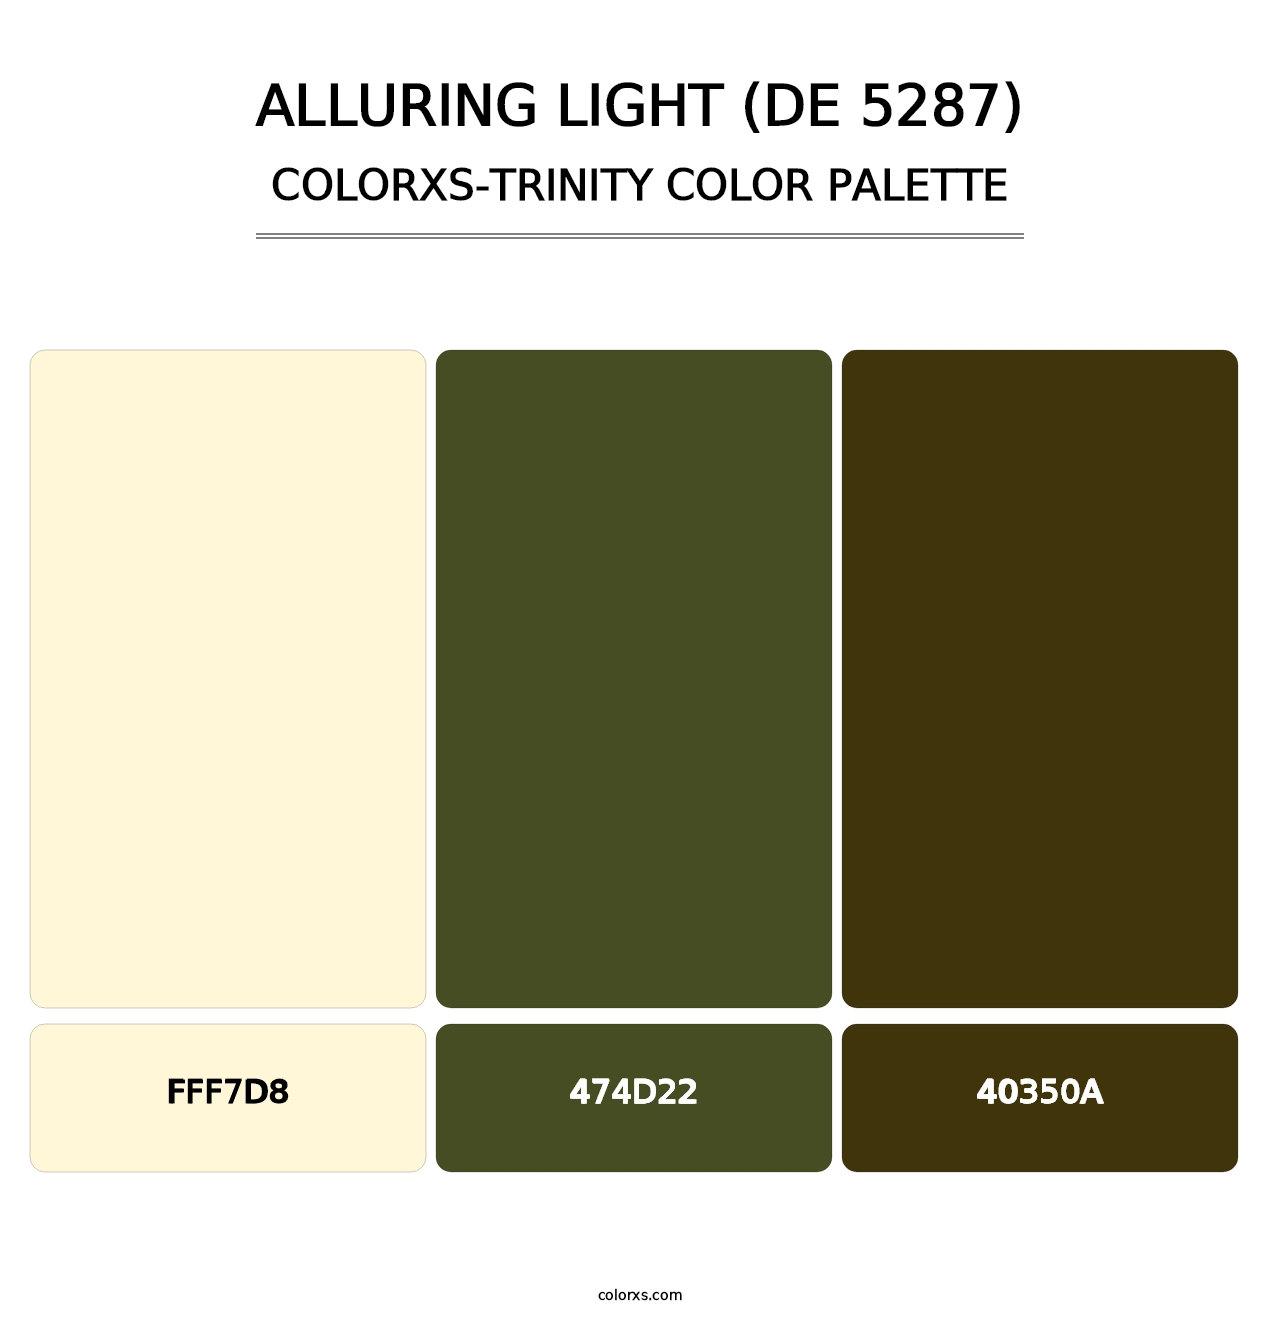 Alluring Light (DE 5287) - Colorxs Trinity Palette